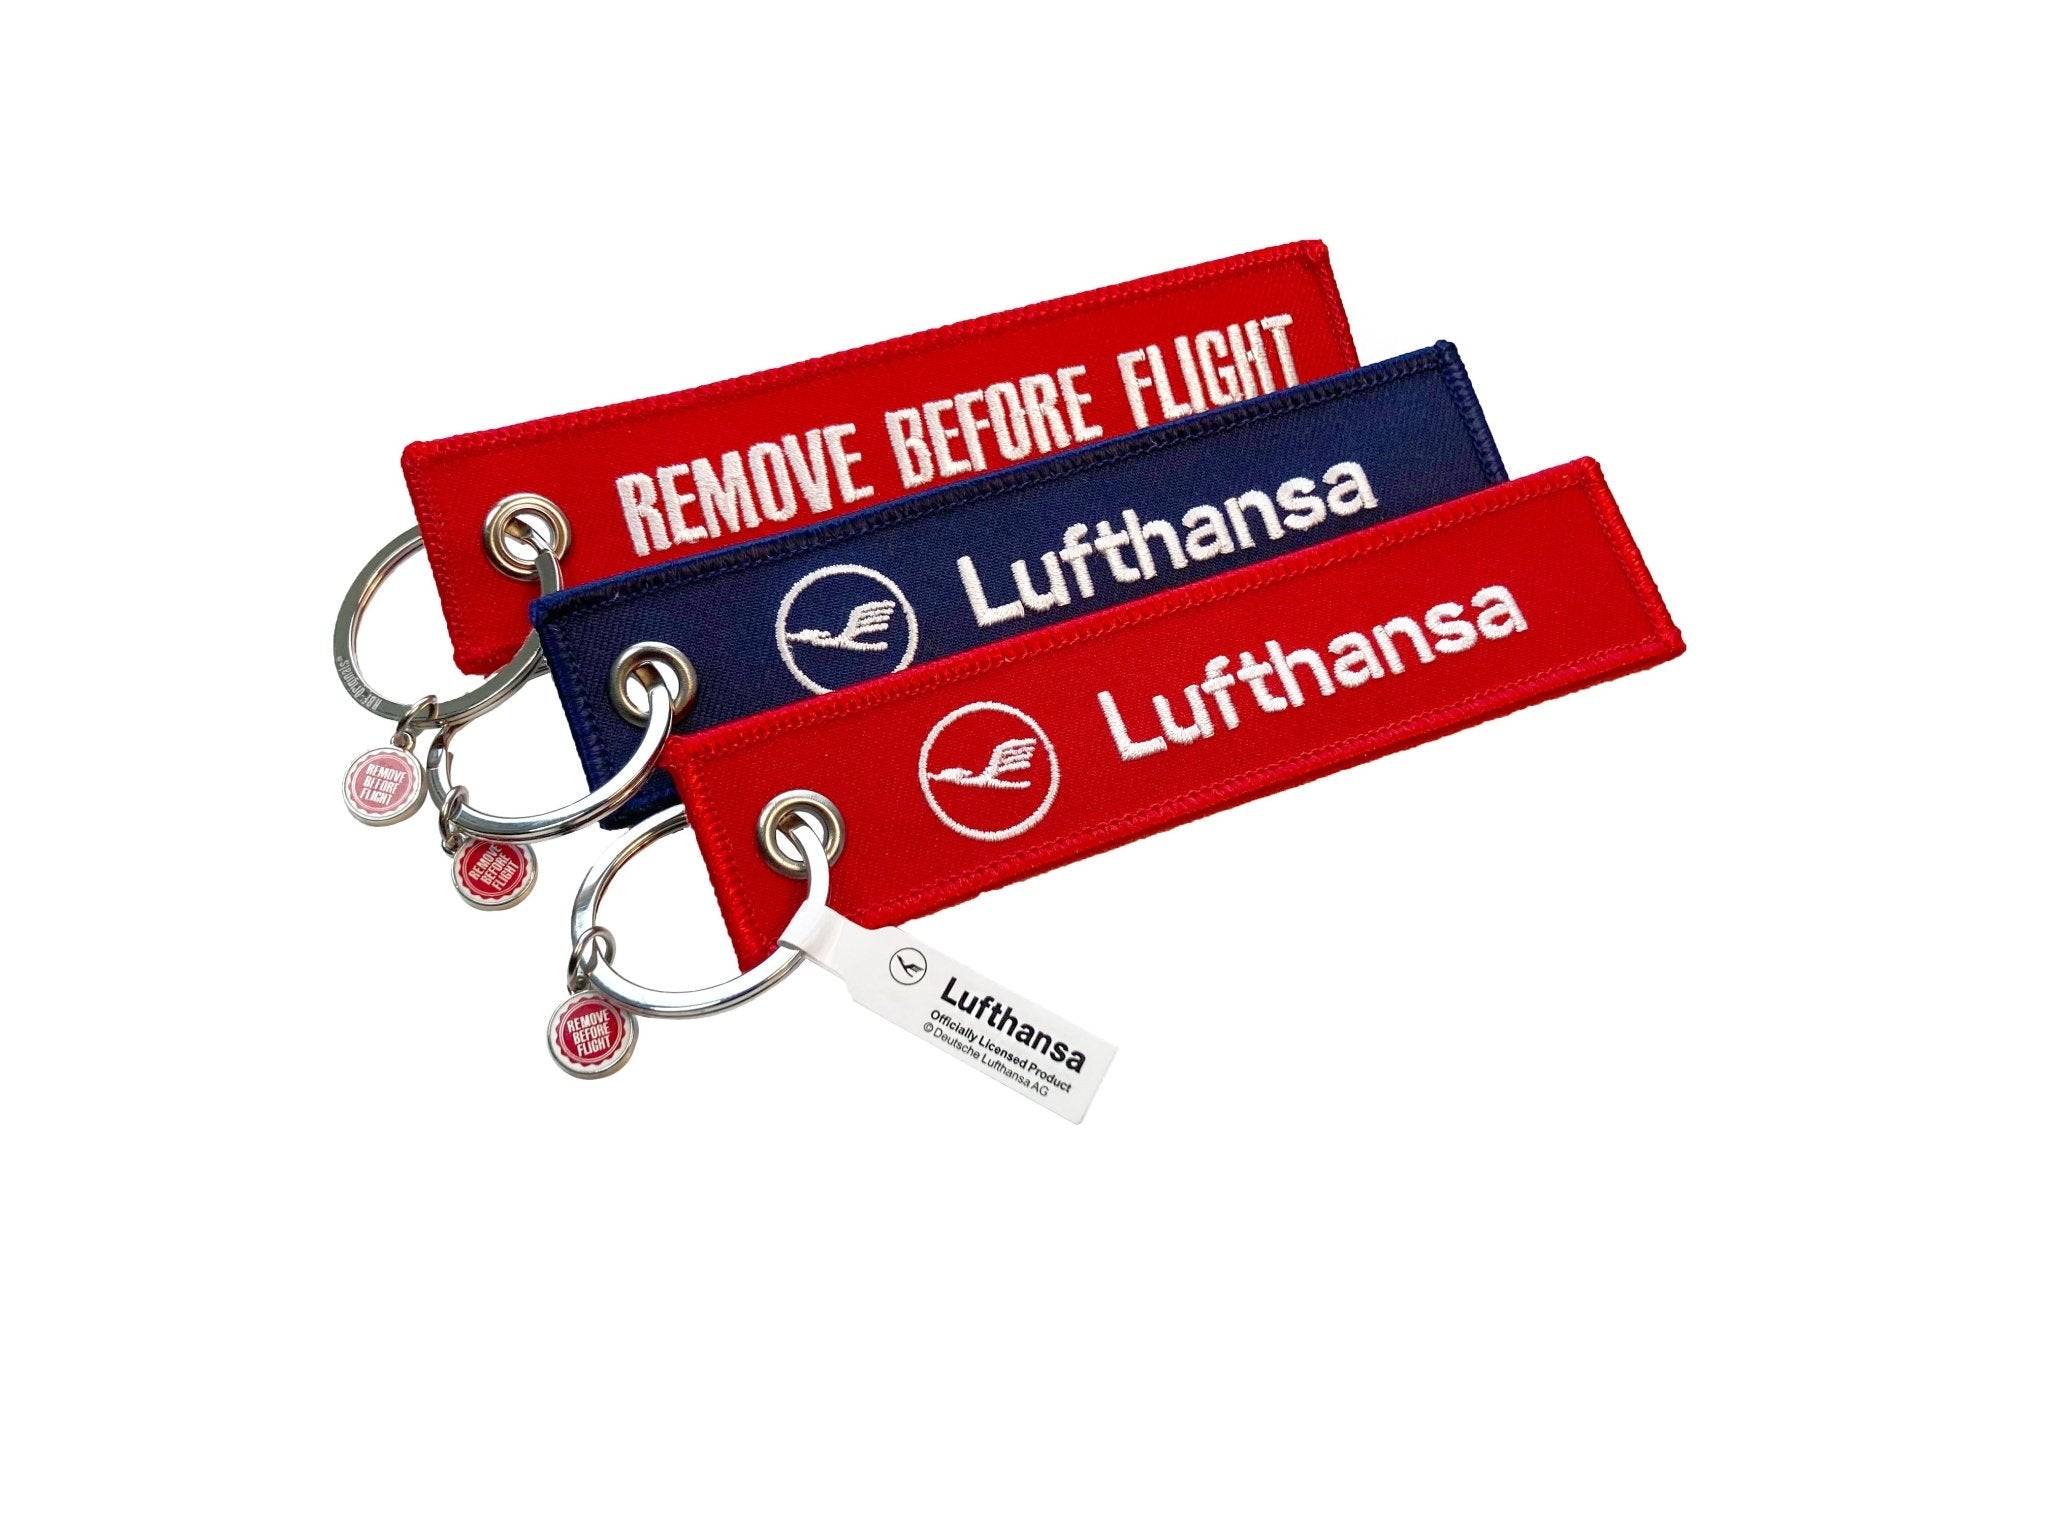 "Lufthansa" Schlüsselanhänger - Remove Before Flight - 25center.com